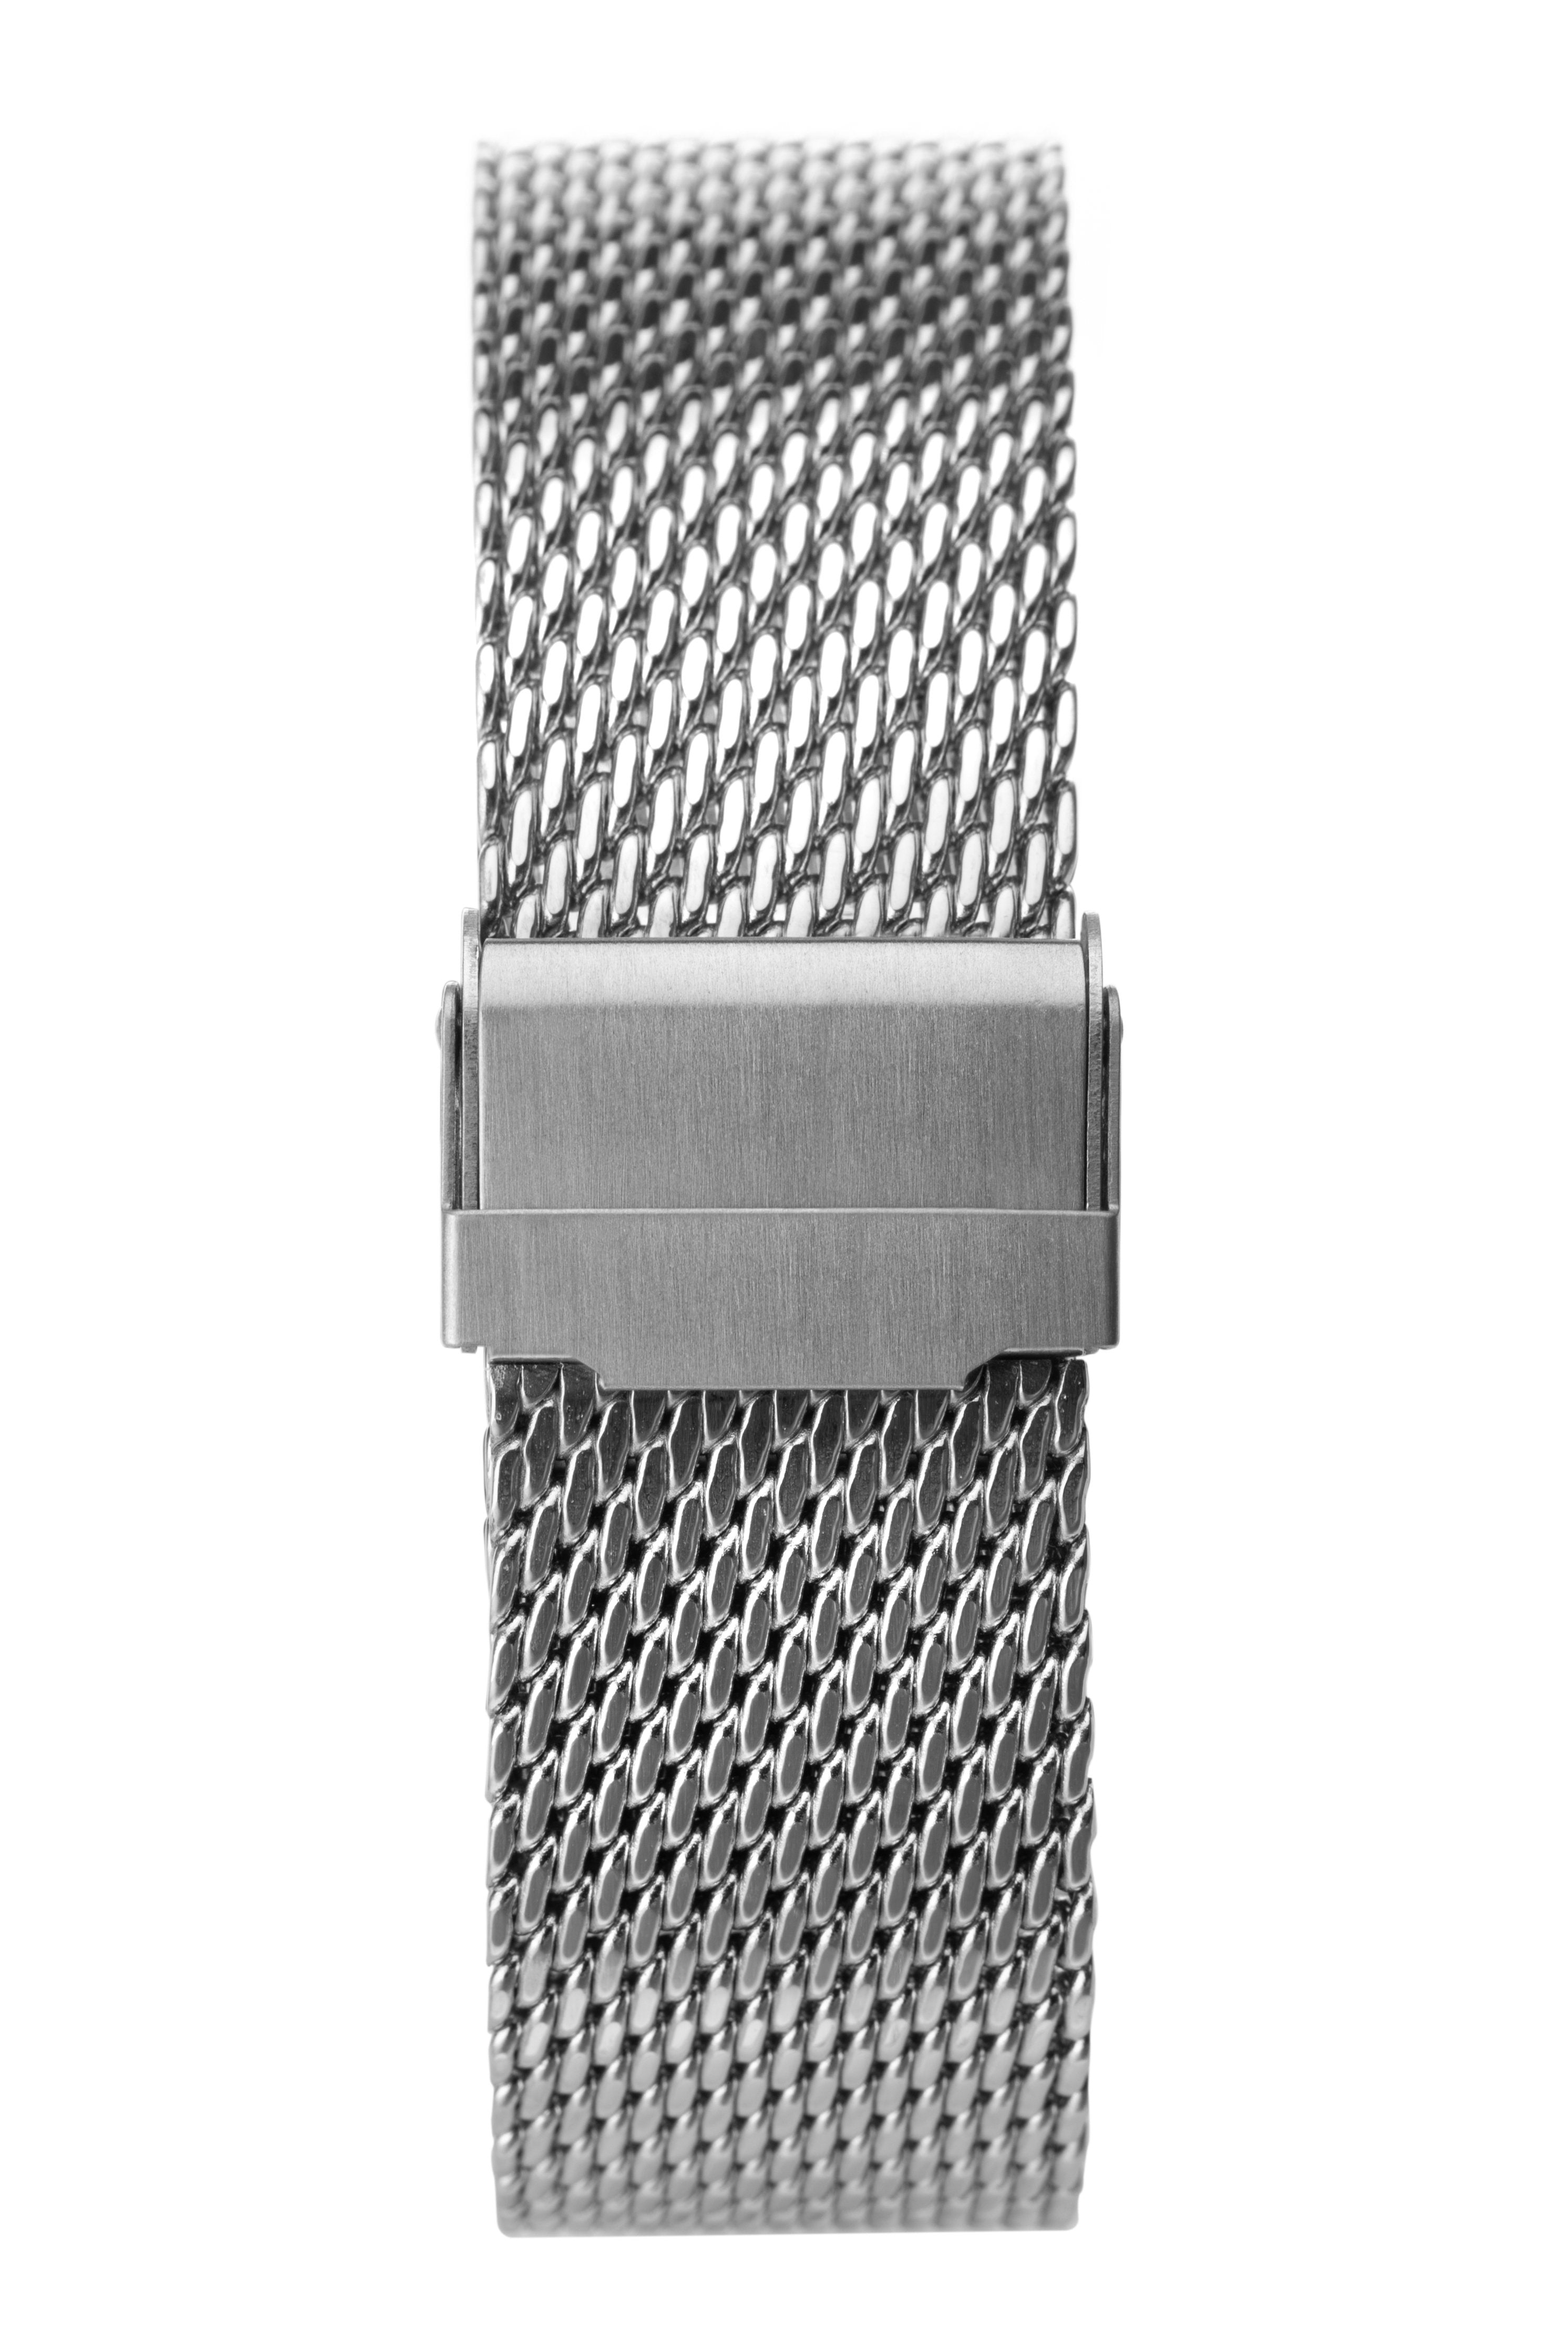 Sekonda Men's Multifunction Milanese Bracelet Watch SK1841 | Ice Jewellery Australia